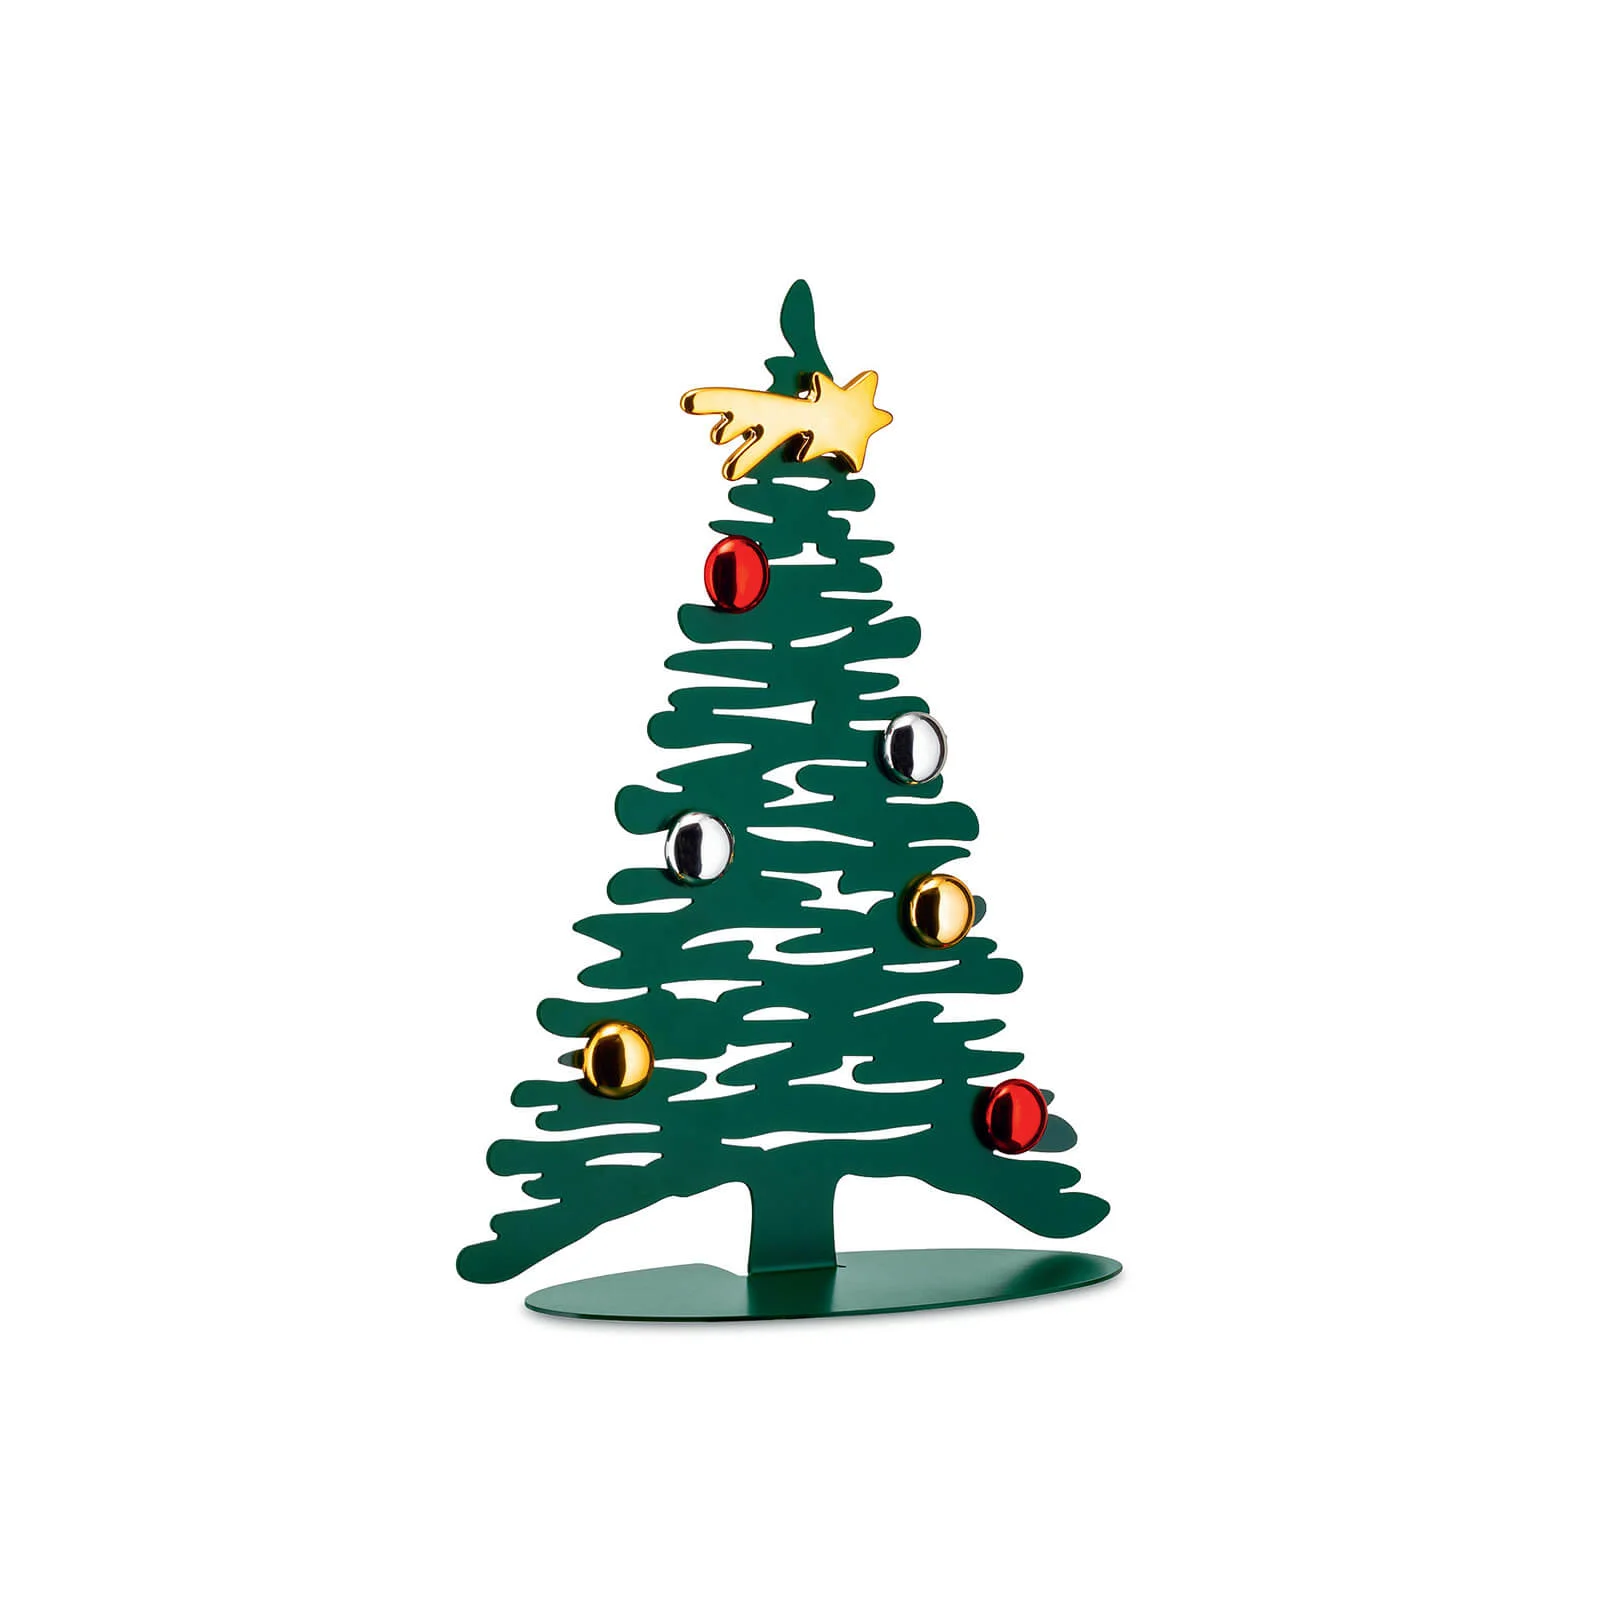 Alessi Bark Christmas Tree - Green Image 1